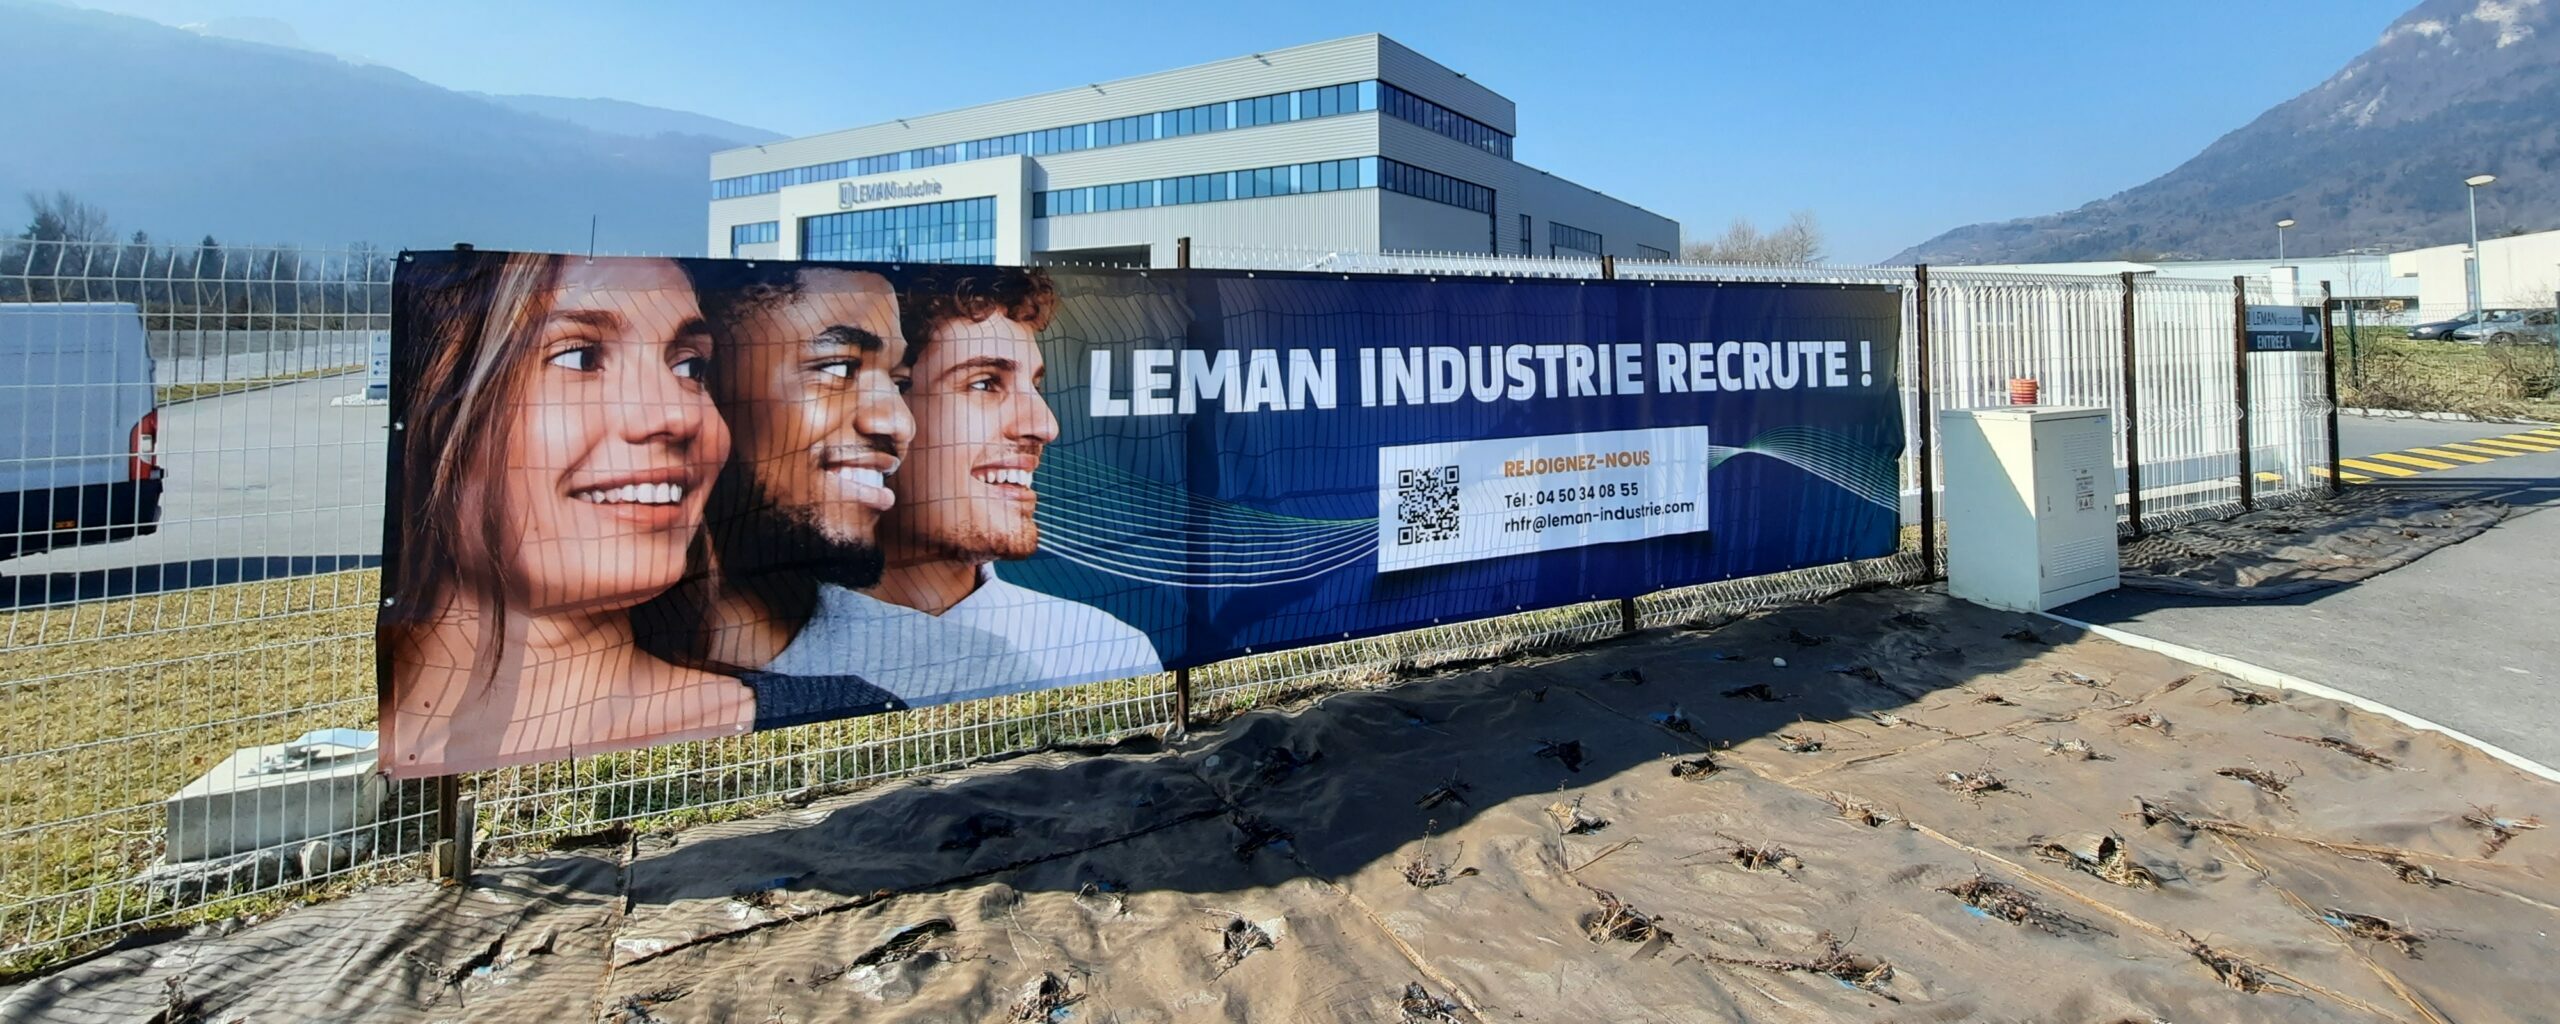 Leman-industrie-banderole